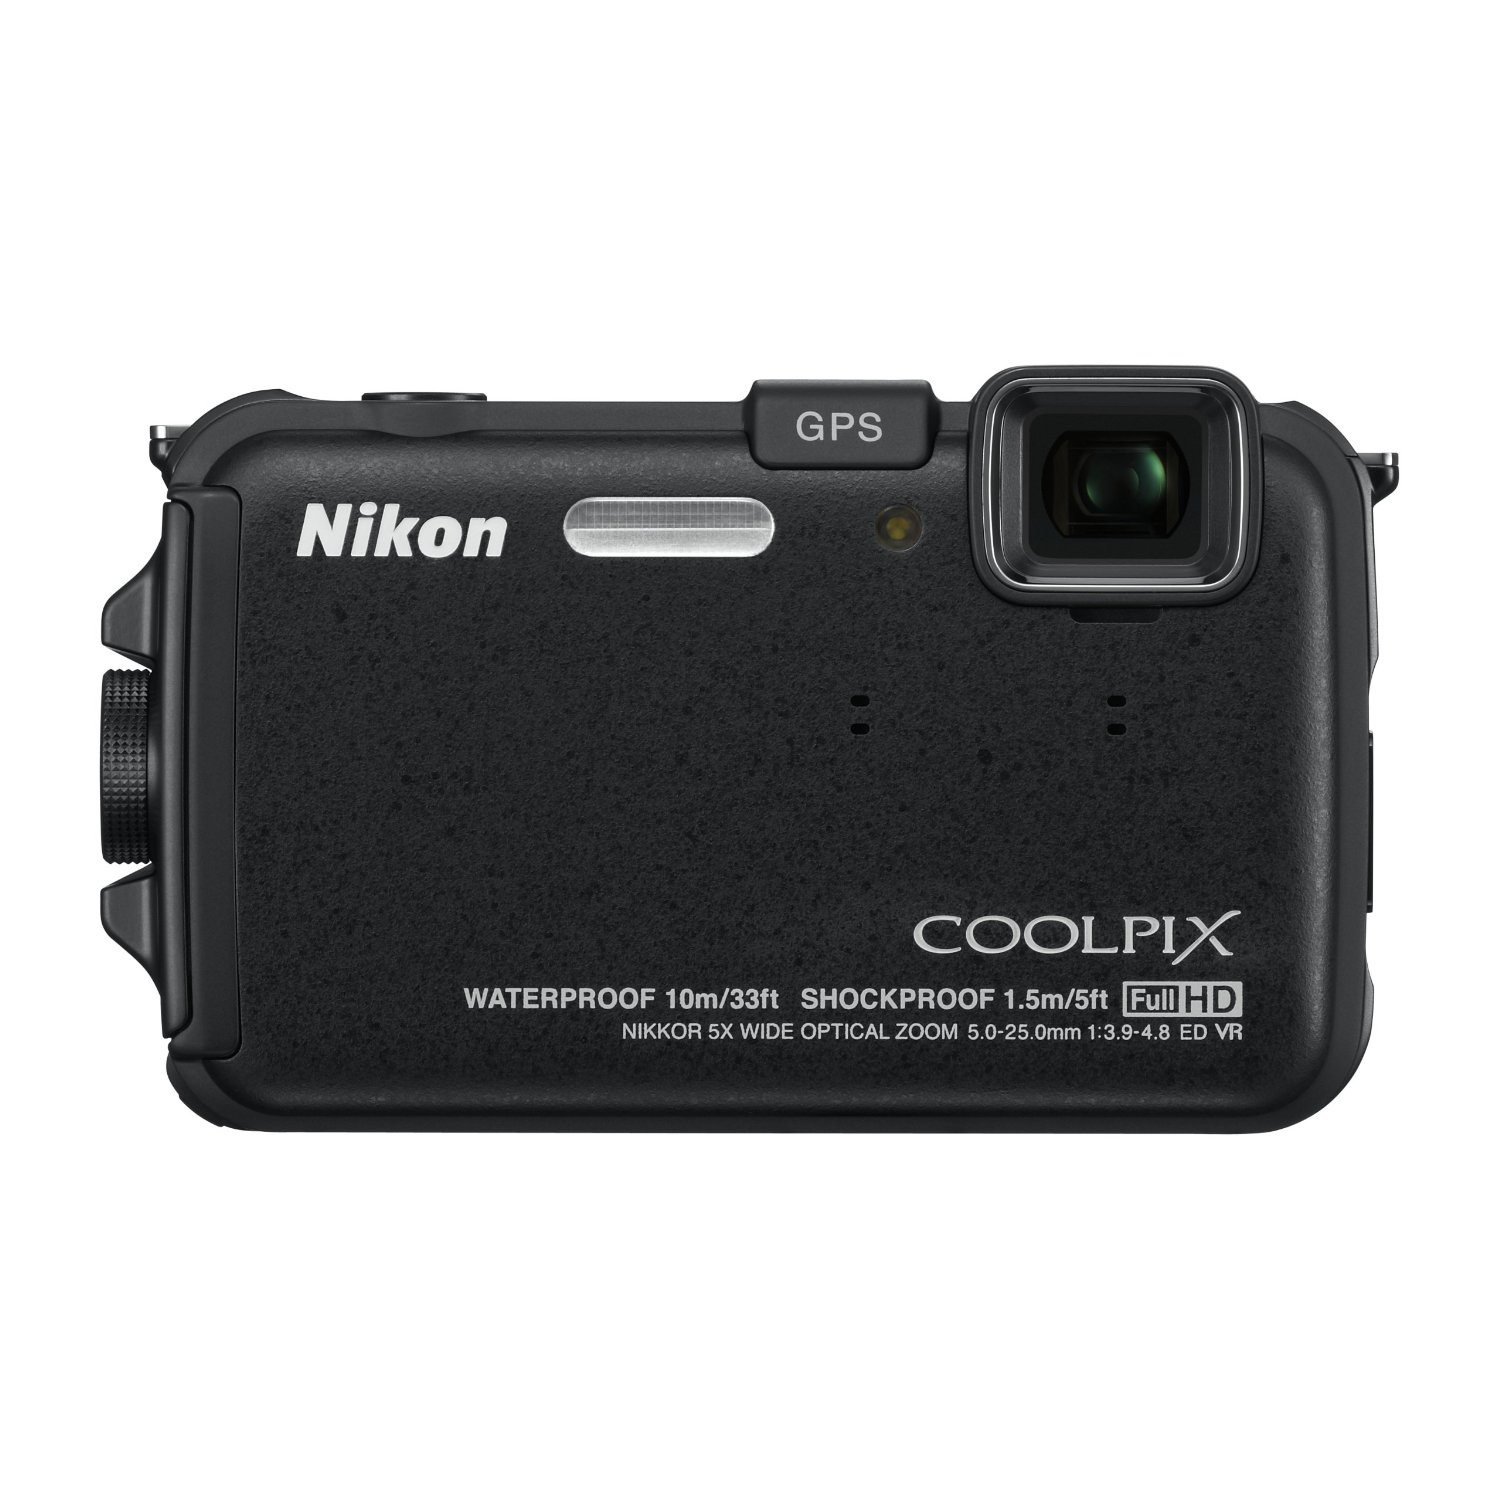 http://thetechjournal.com/wp-content/uploads/images/1110/1318937820-nikon-coolpix-aw100-16-mp-cmos-waterproof-digital-camera-1.jpg